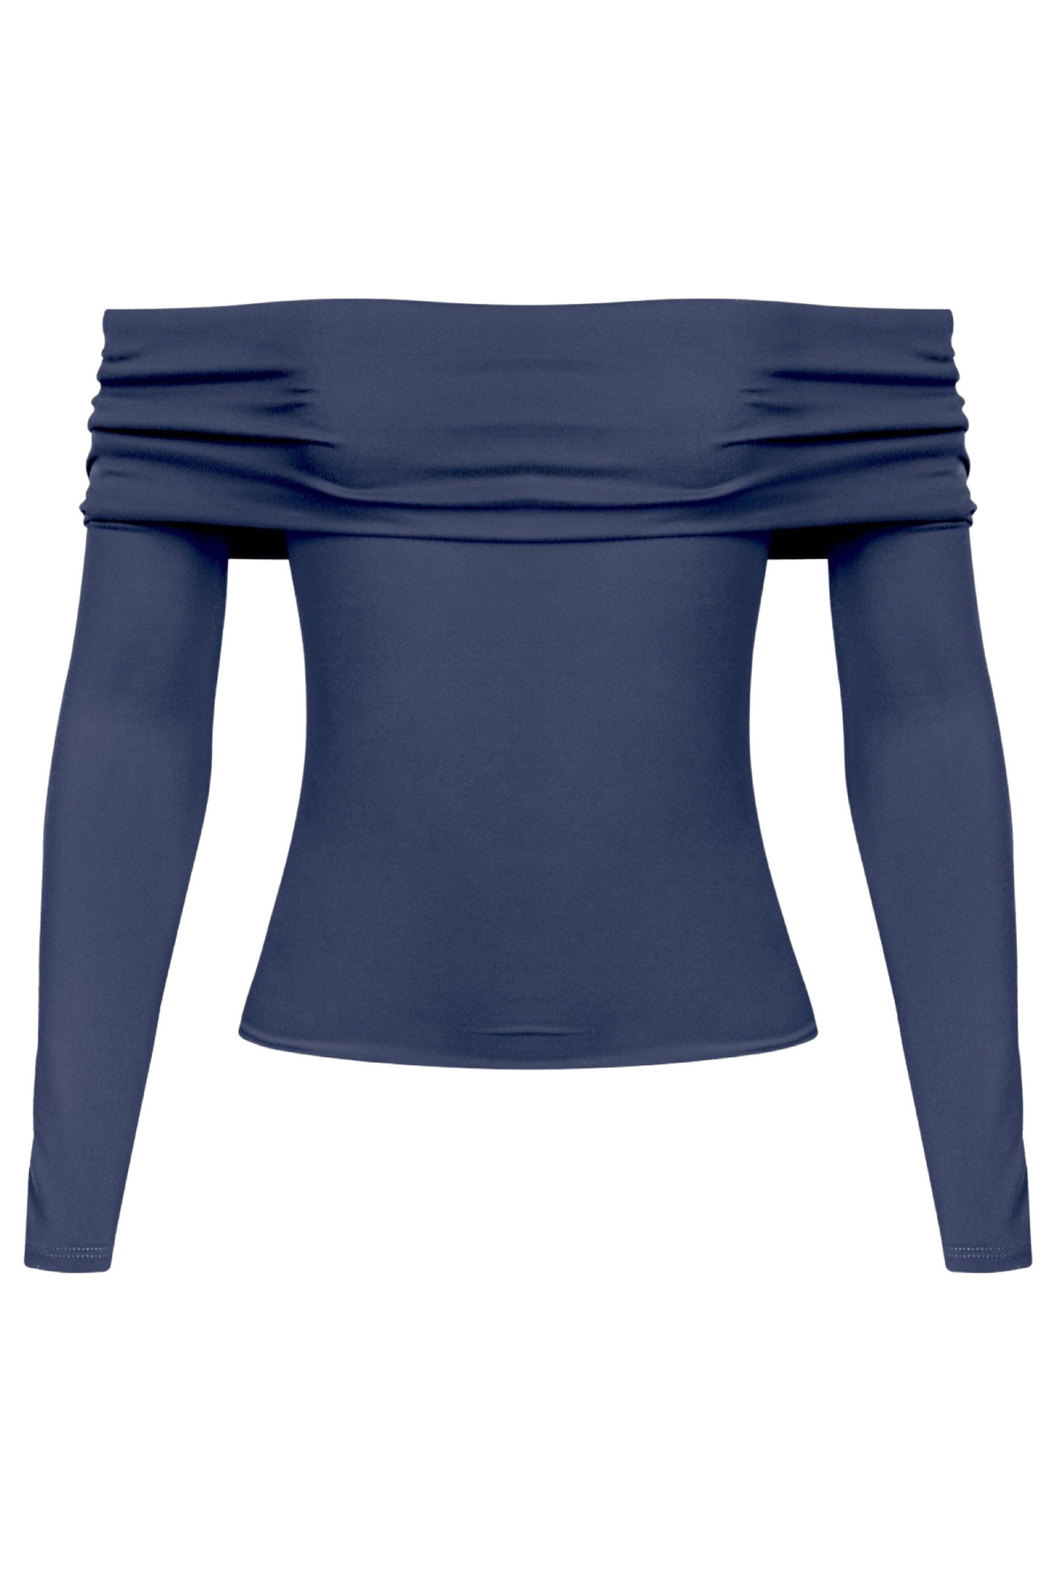 Zara Off Shoulder L/S Top (Navy Blue)